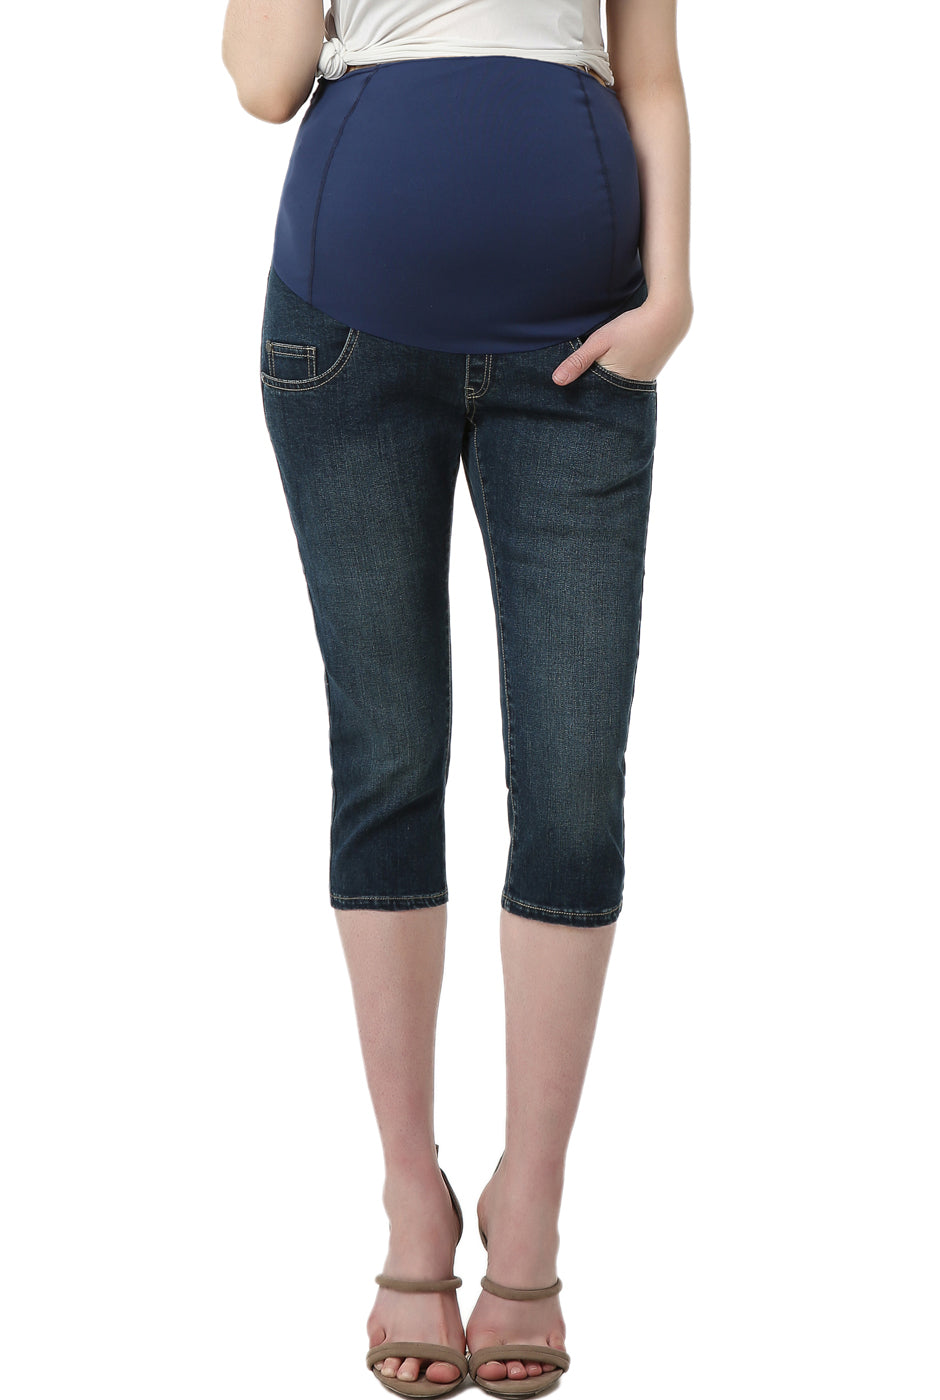 Women's Maternity Courtney Capri Jeans